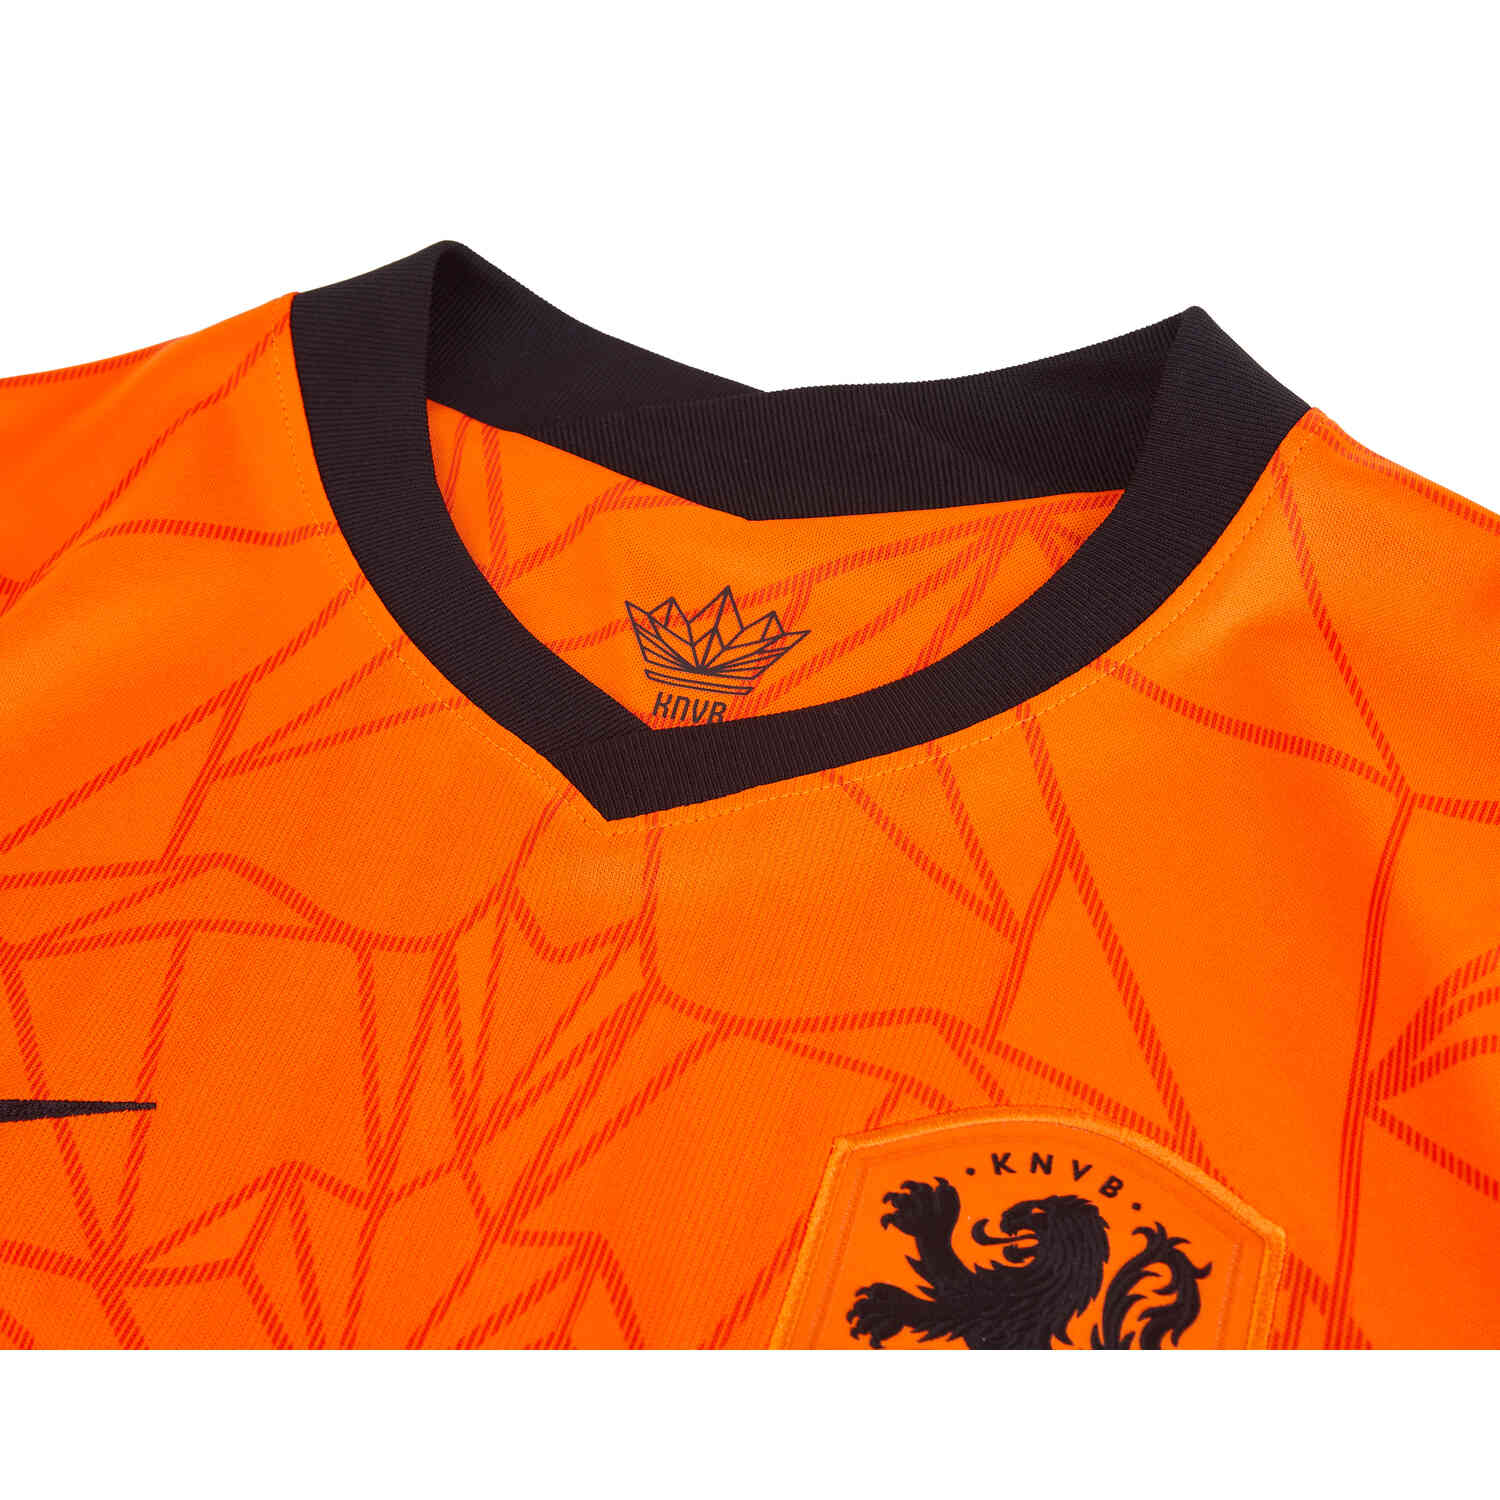 Mens Netherlands Home Stadium Jersey - Safety Orange & Black